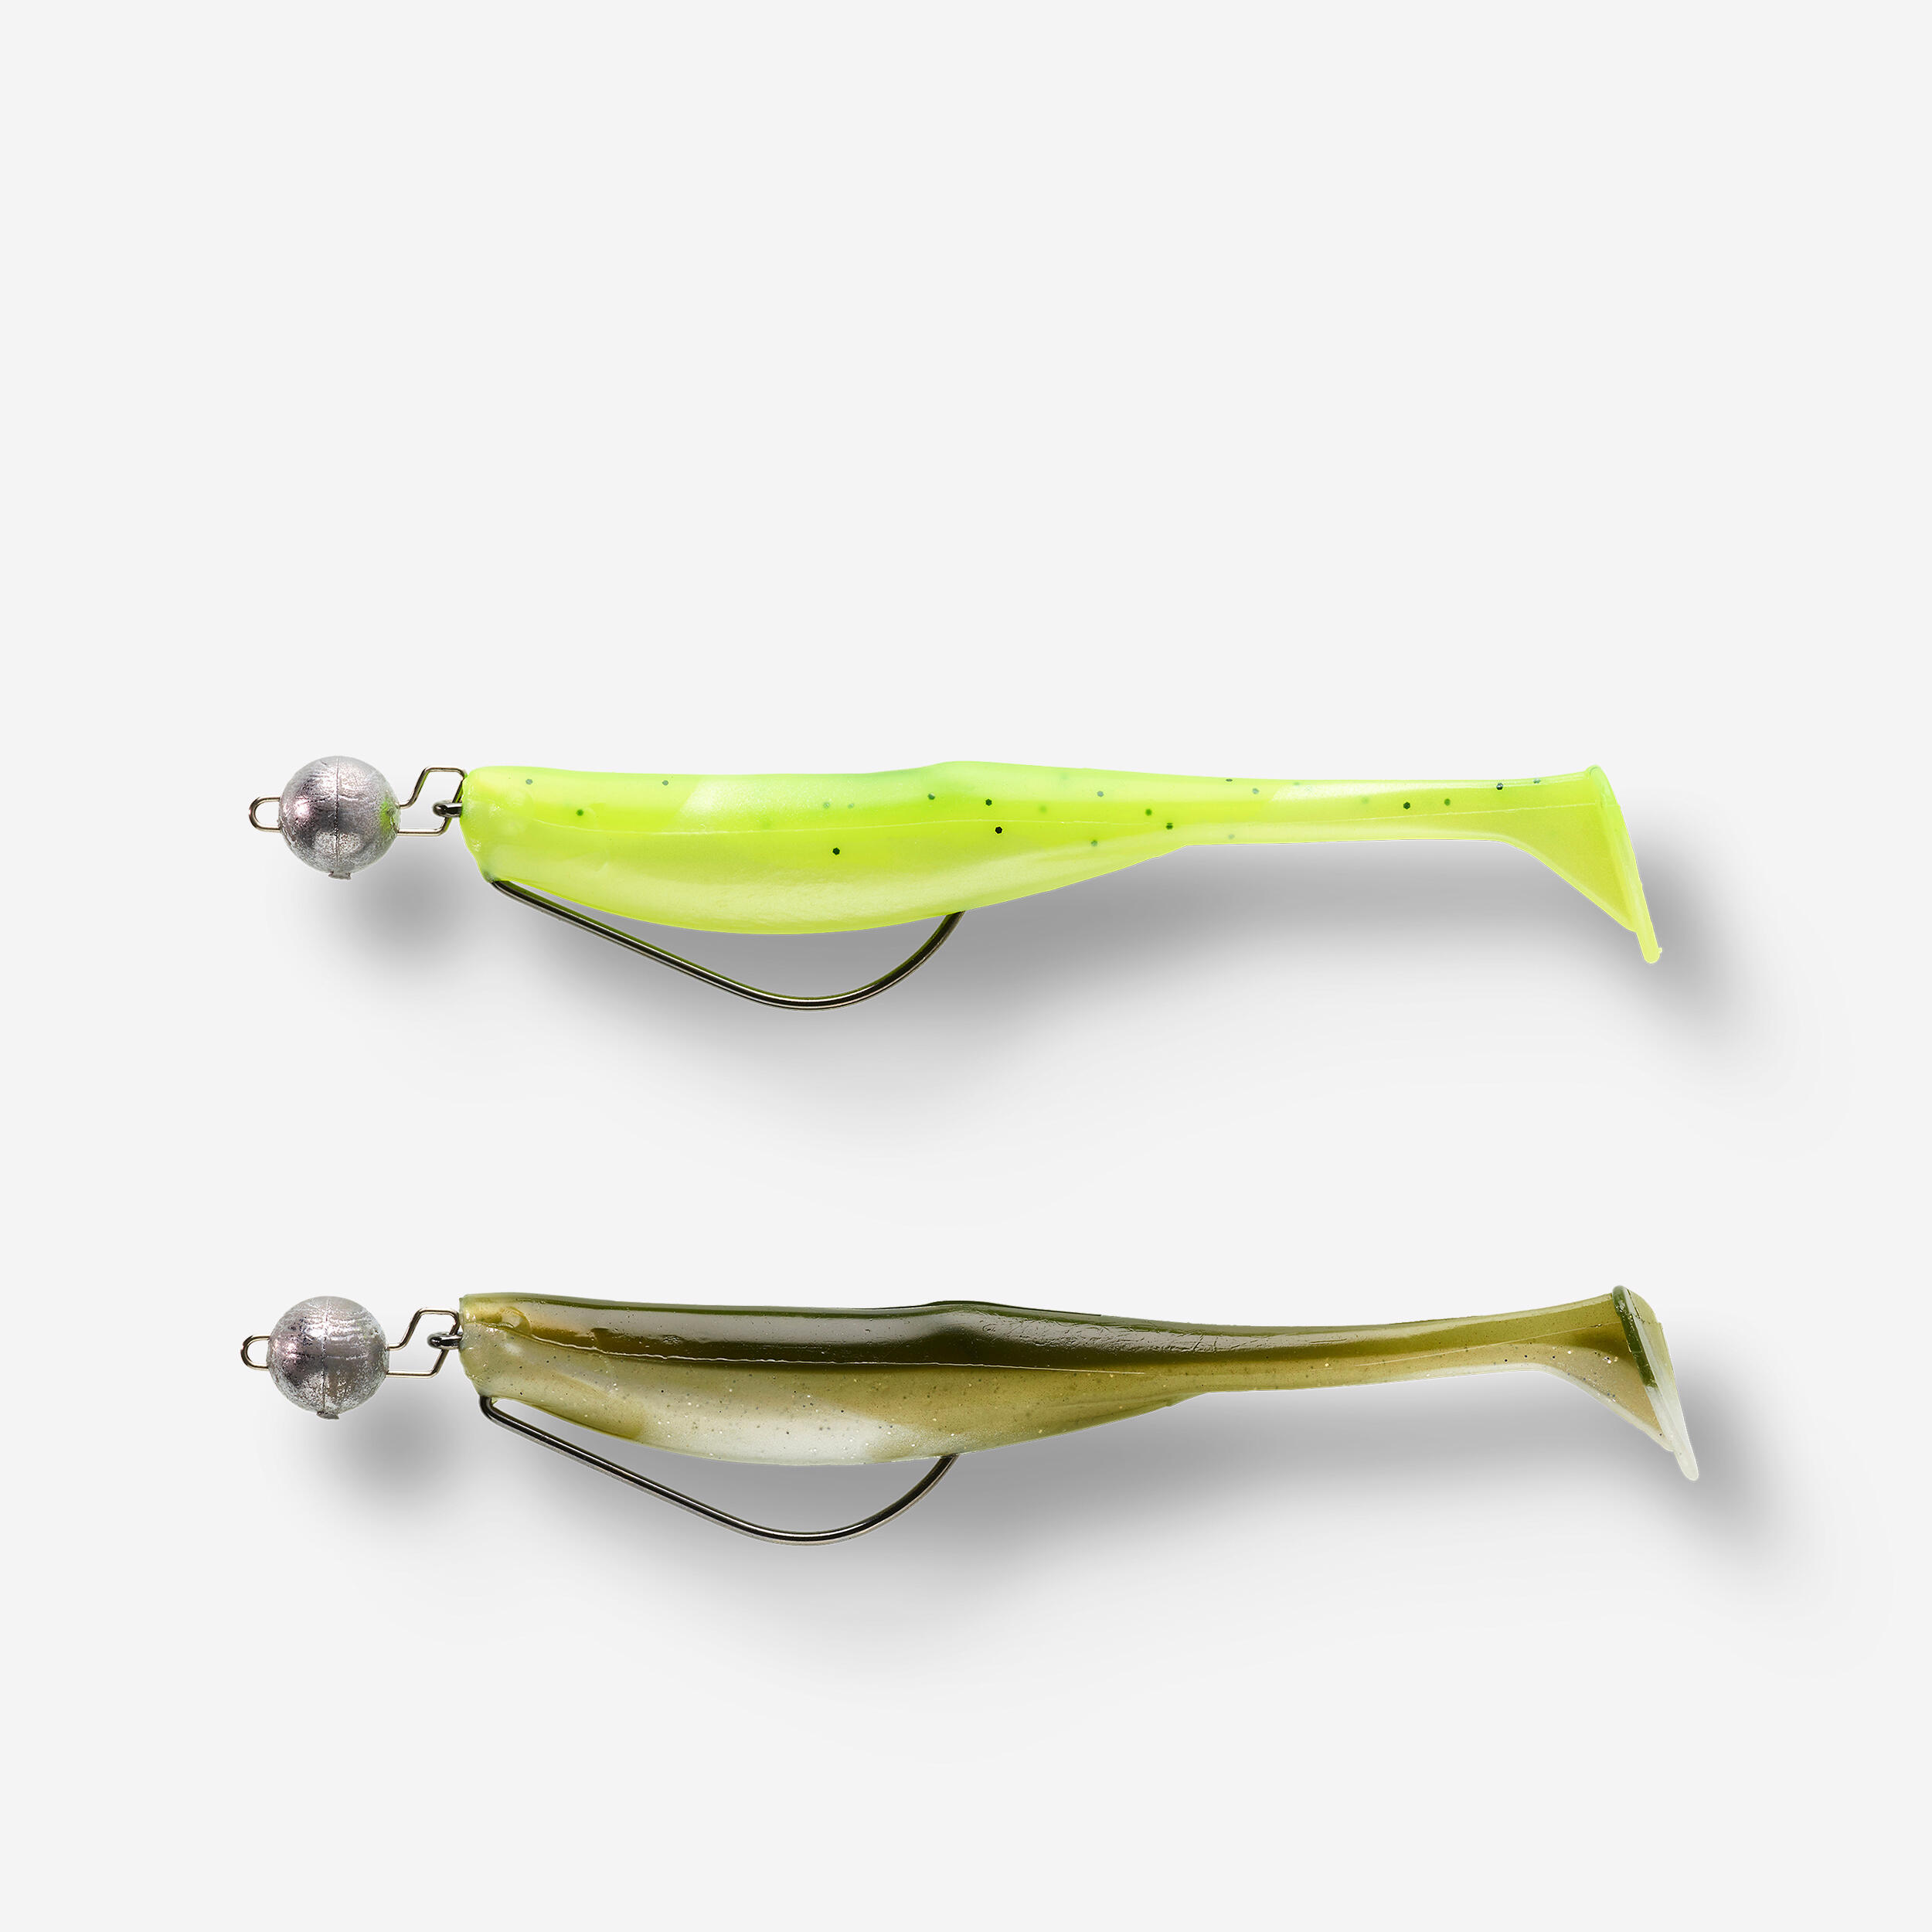 130 lure fishing soft bait kit - Fluo lime, Olive green - Caperlan -  Decathlon